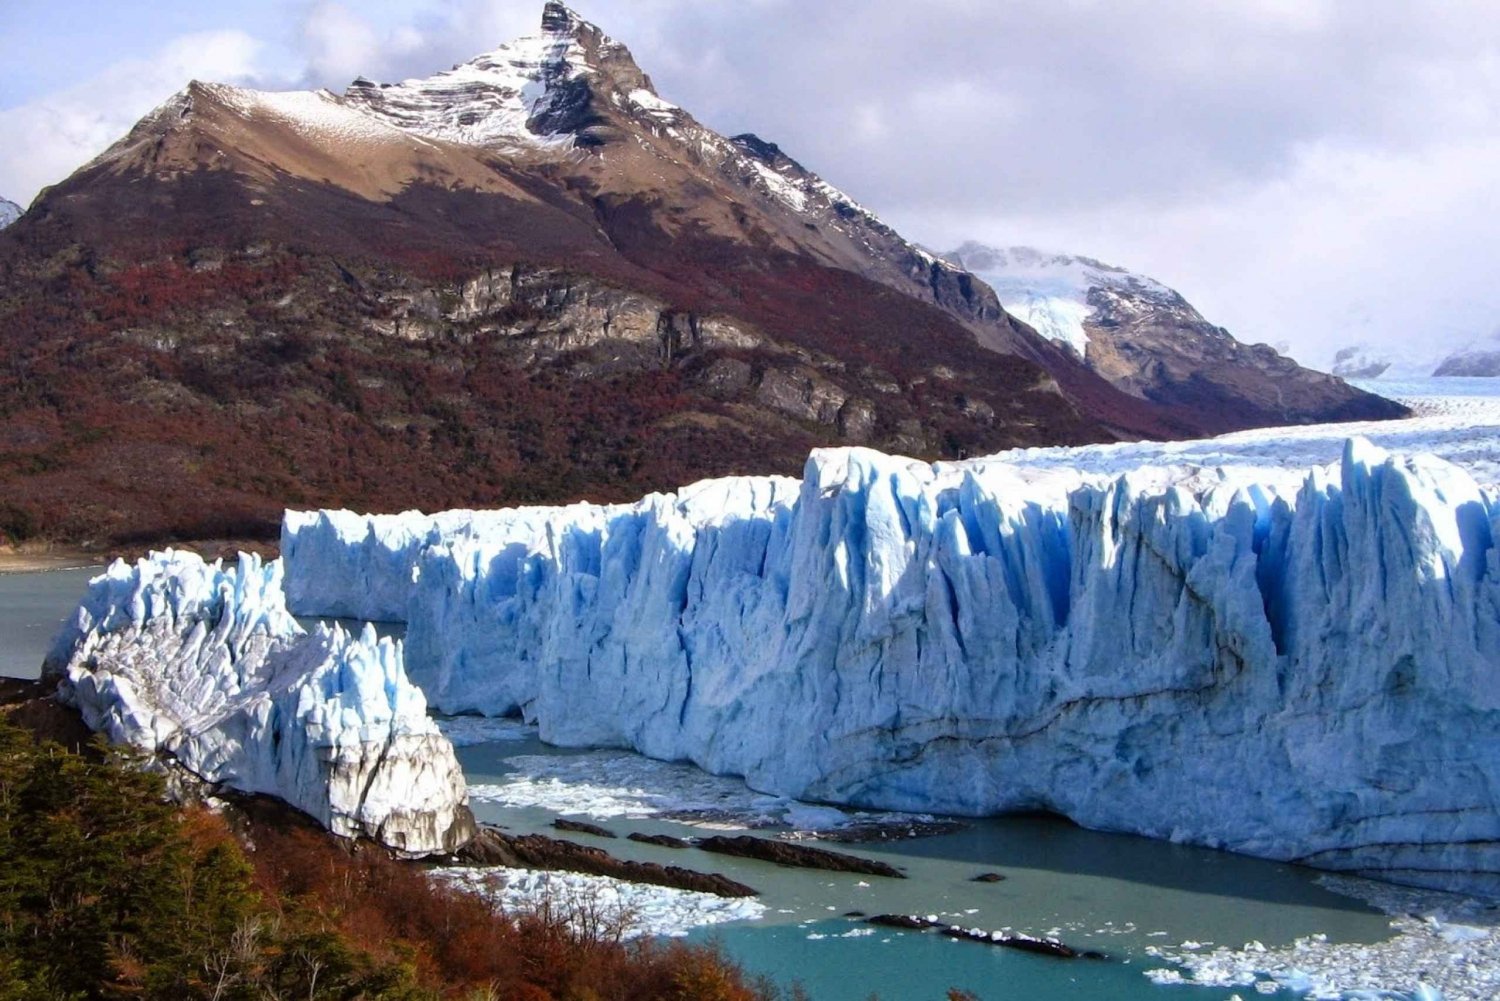 Park Narodowy Los Glaciares i wycieczka na lodowiec Perito Moreno